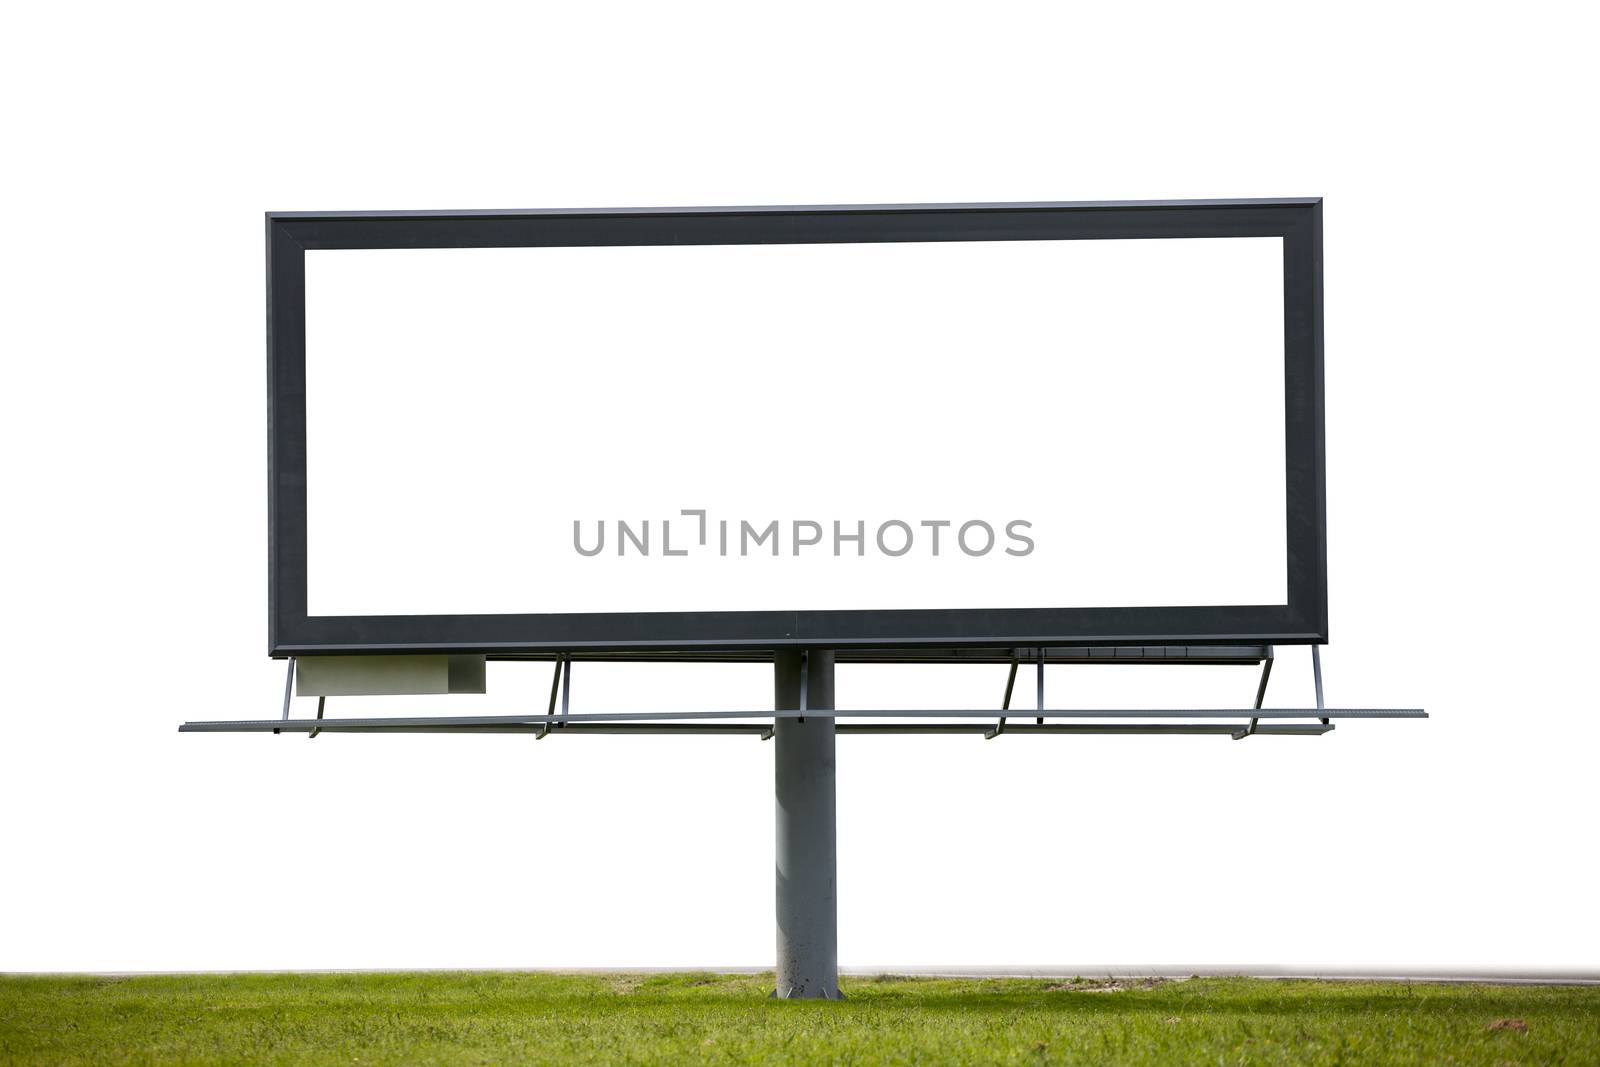 Large billboard by ints